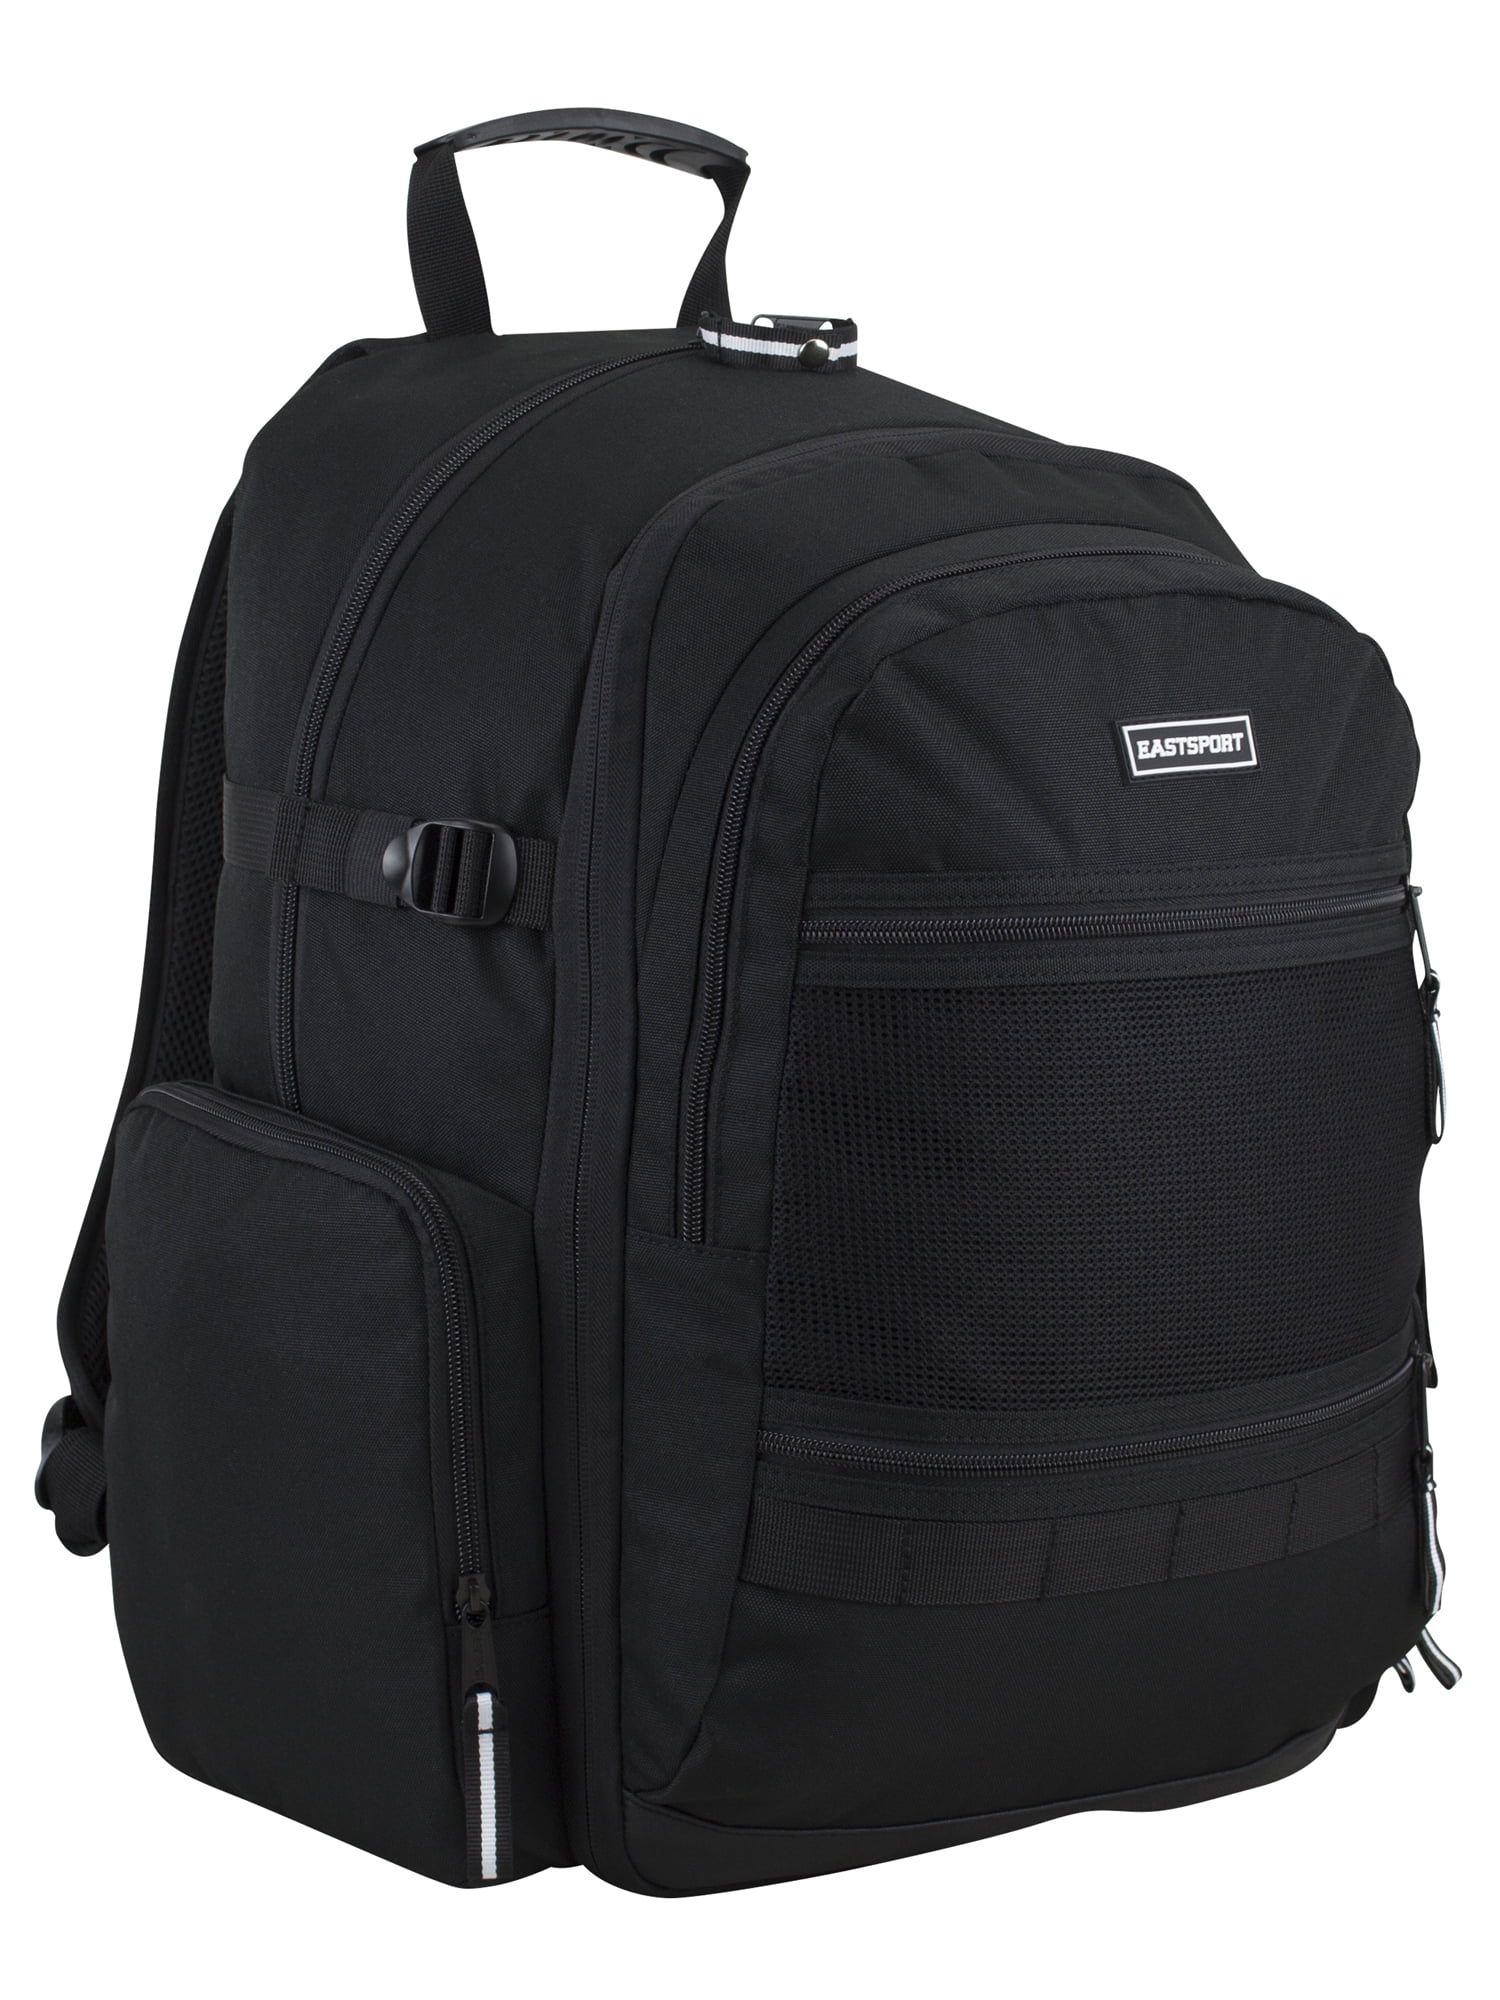 Eastsport Unisex Adult Expandable Alliance Backpack Black